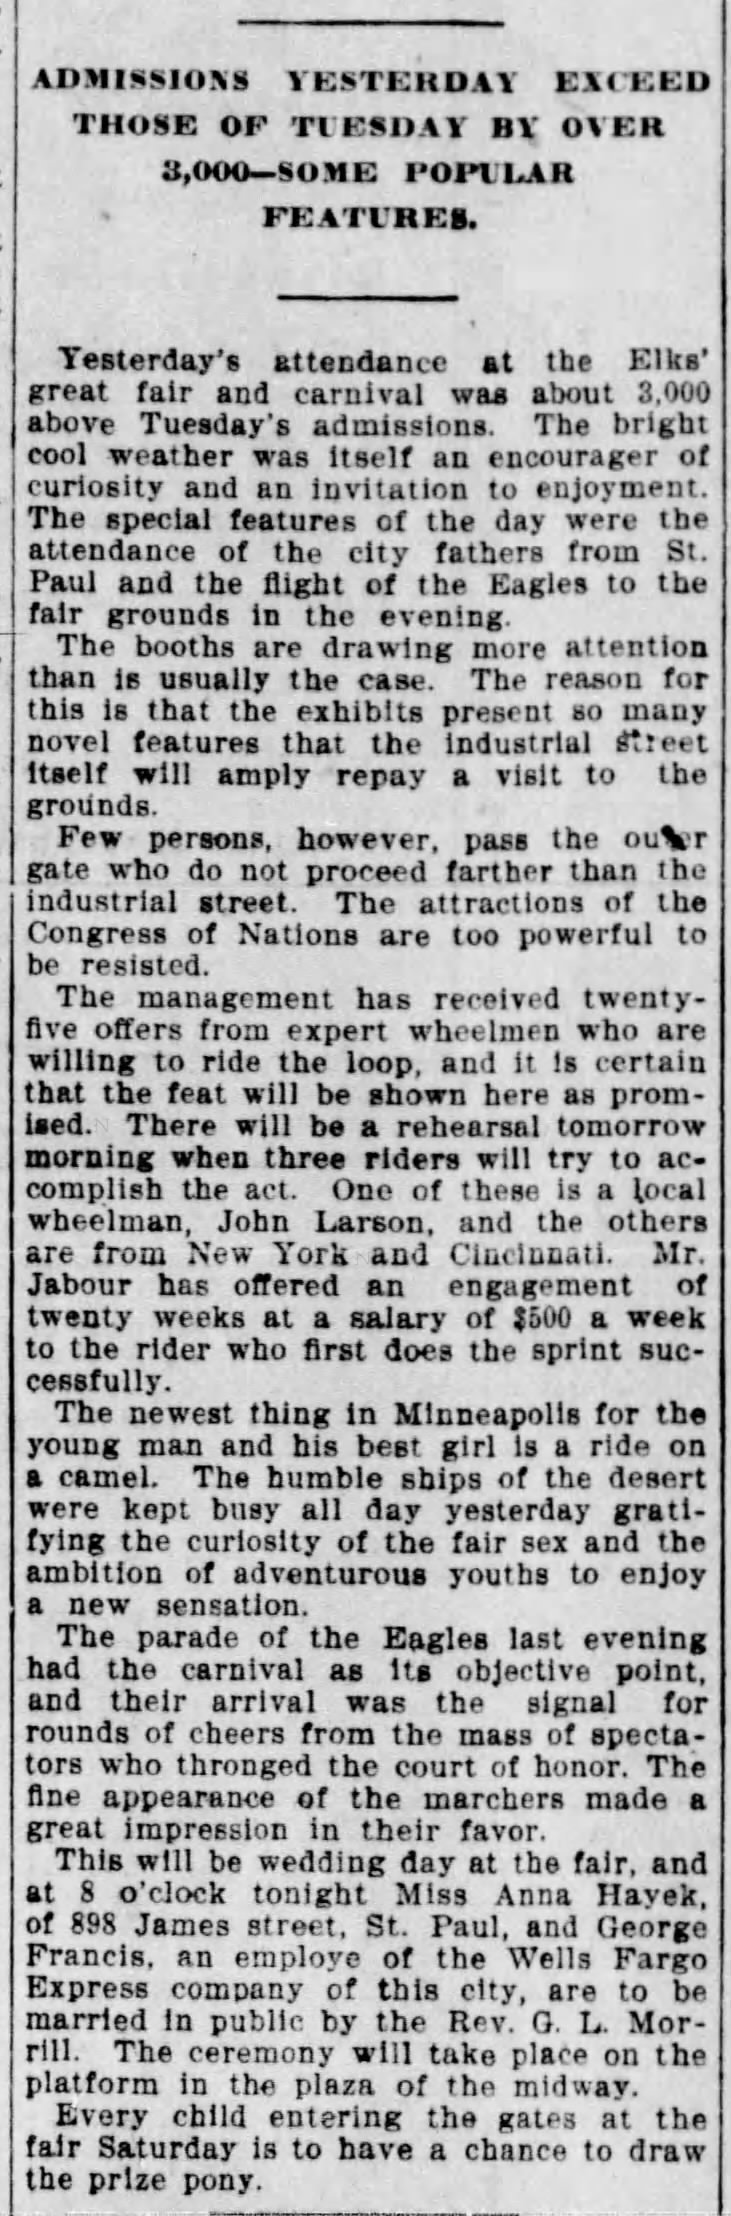 Star Tribune June  5, 1902
Elks Fair Public wedding of
Anna Hayek and George Francis